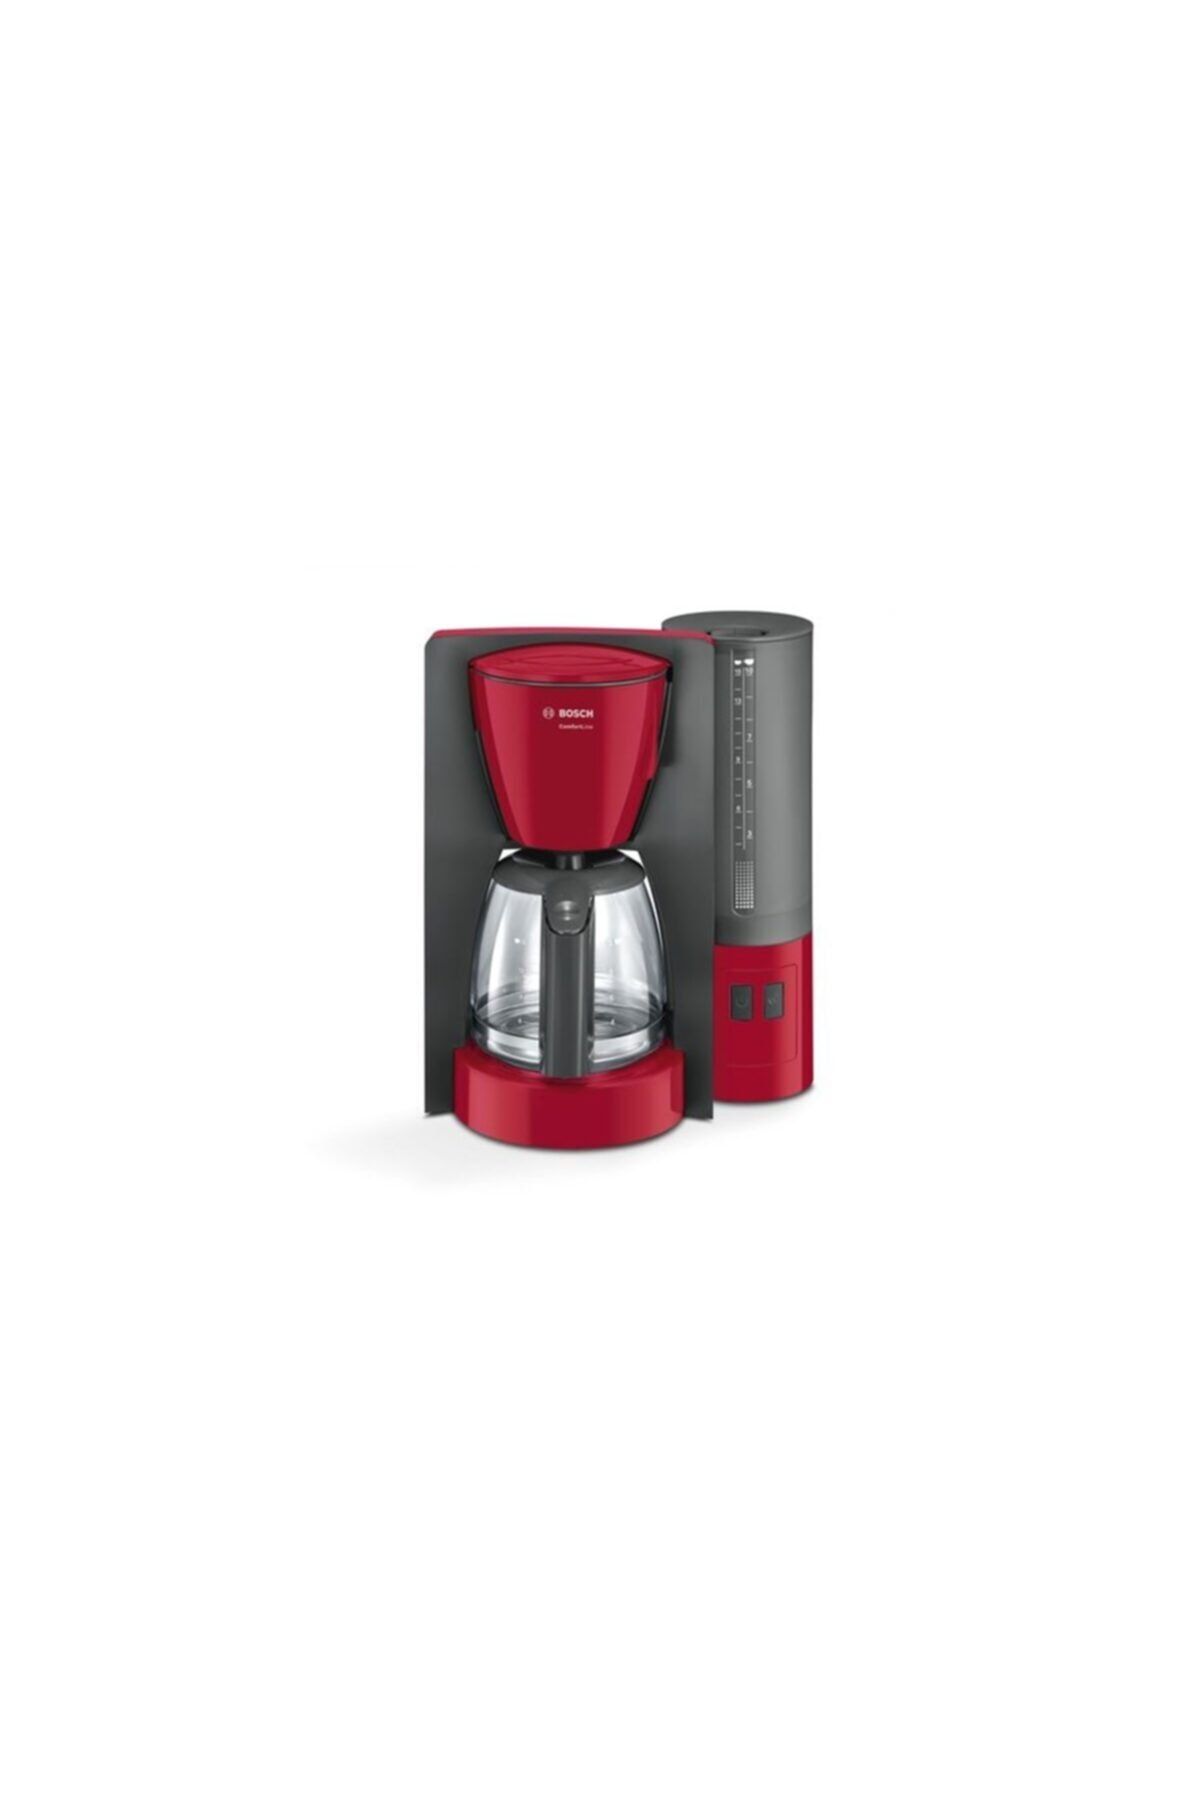 Bosch Tka6a044 Filtre Kahve Makinesicomfortline Kırmızı, Kırmızı